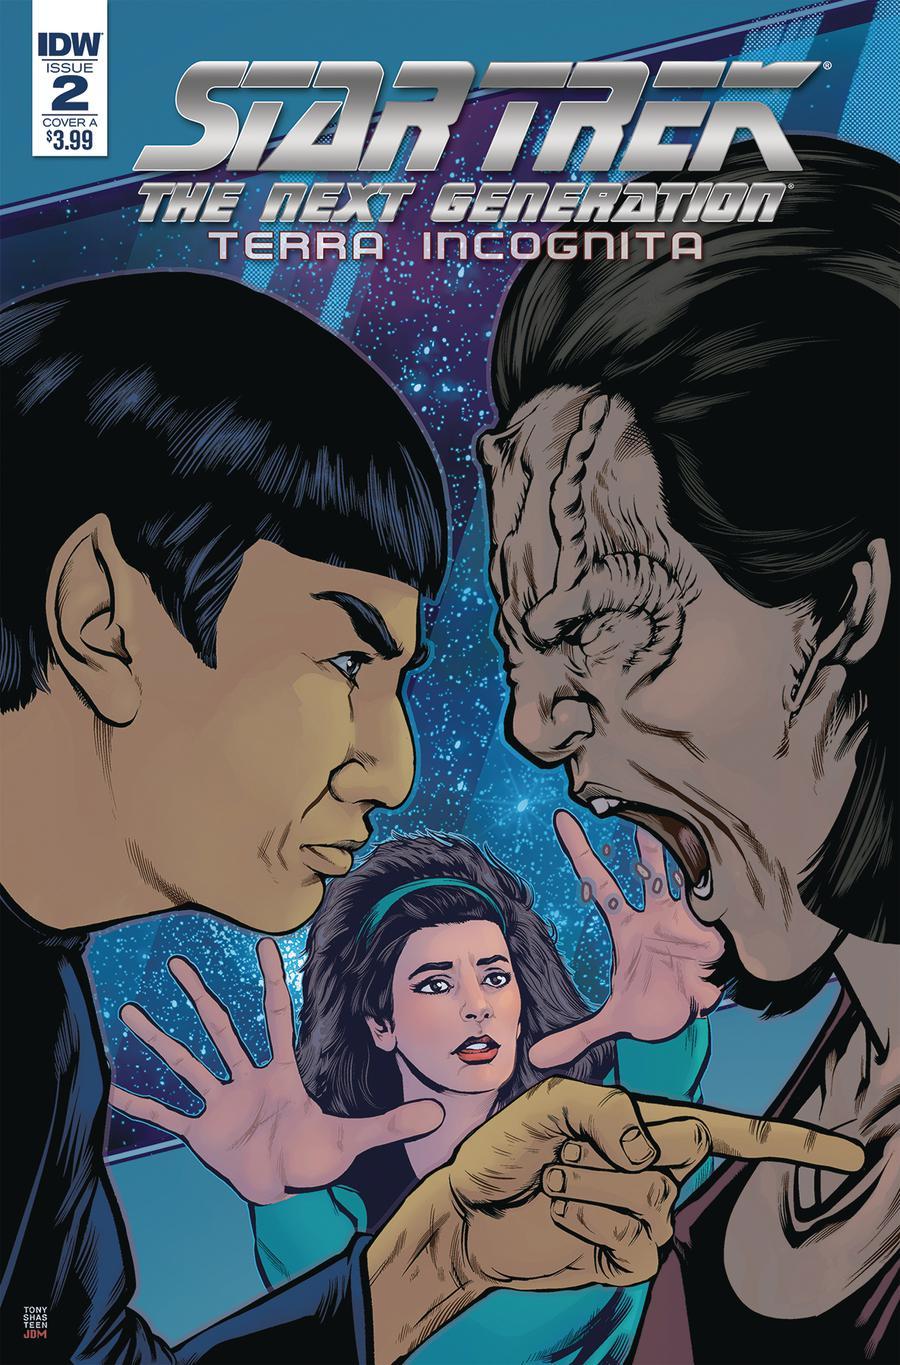 Star Trek The Next Generation Terra Incognita Vol. 1 #2